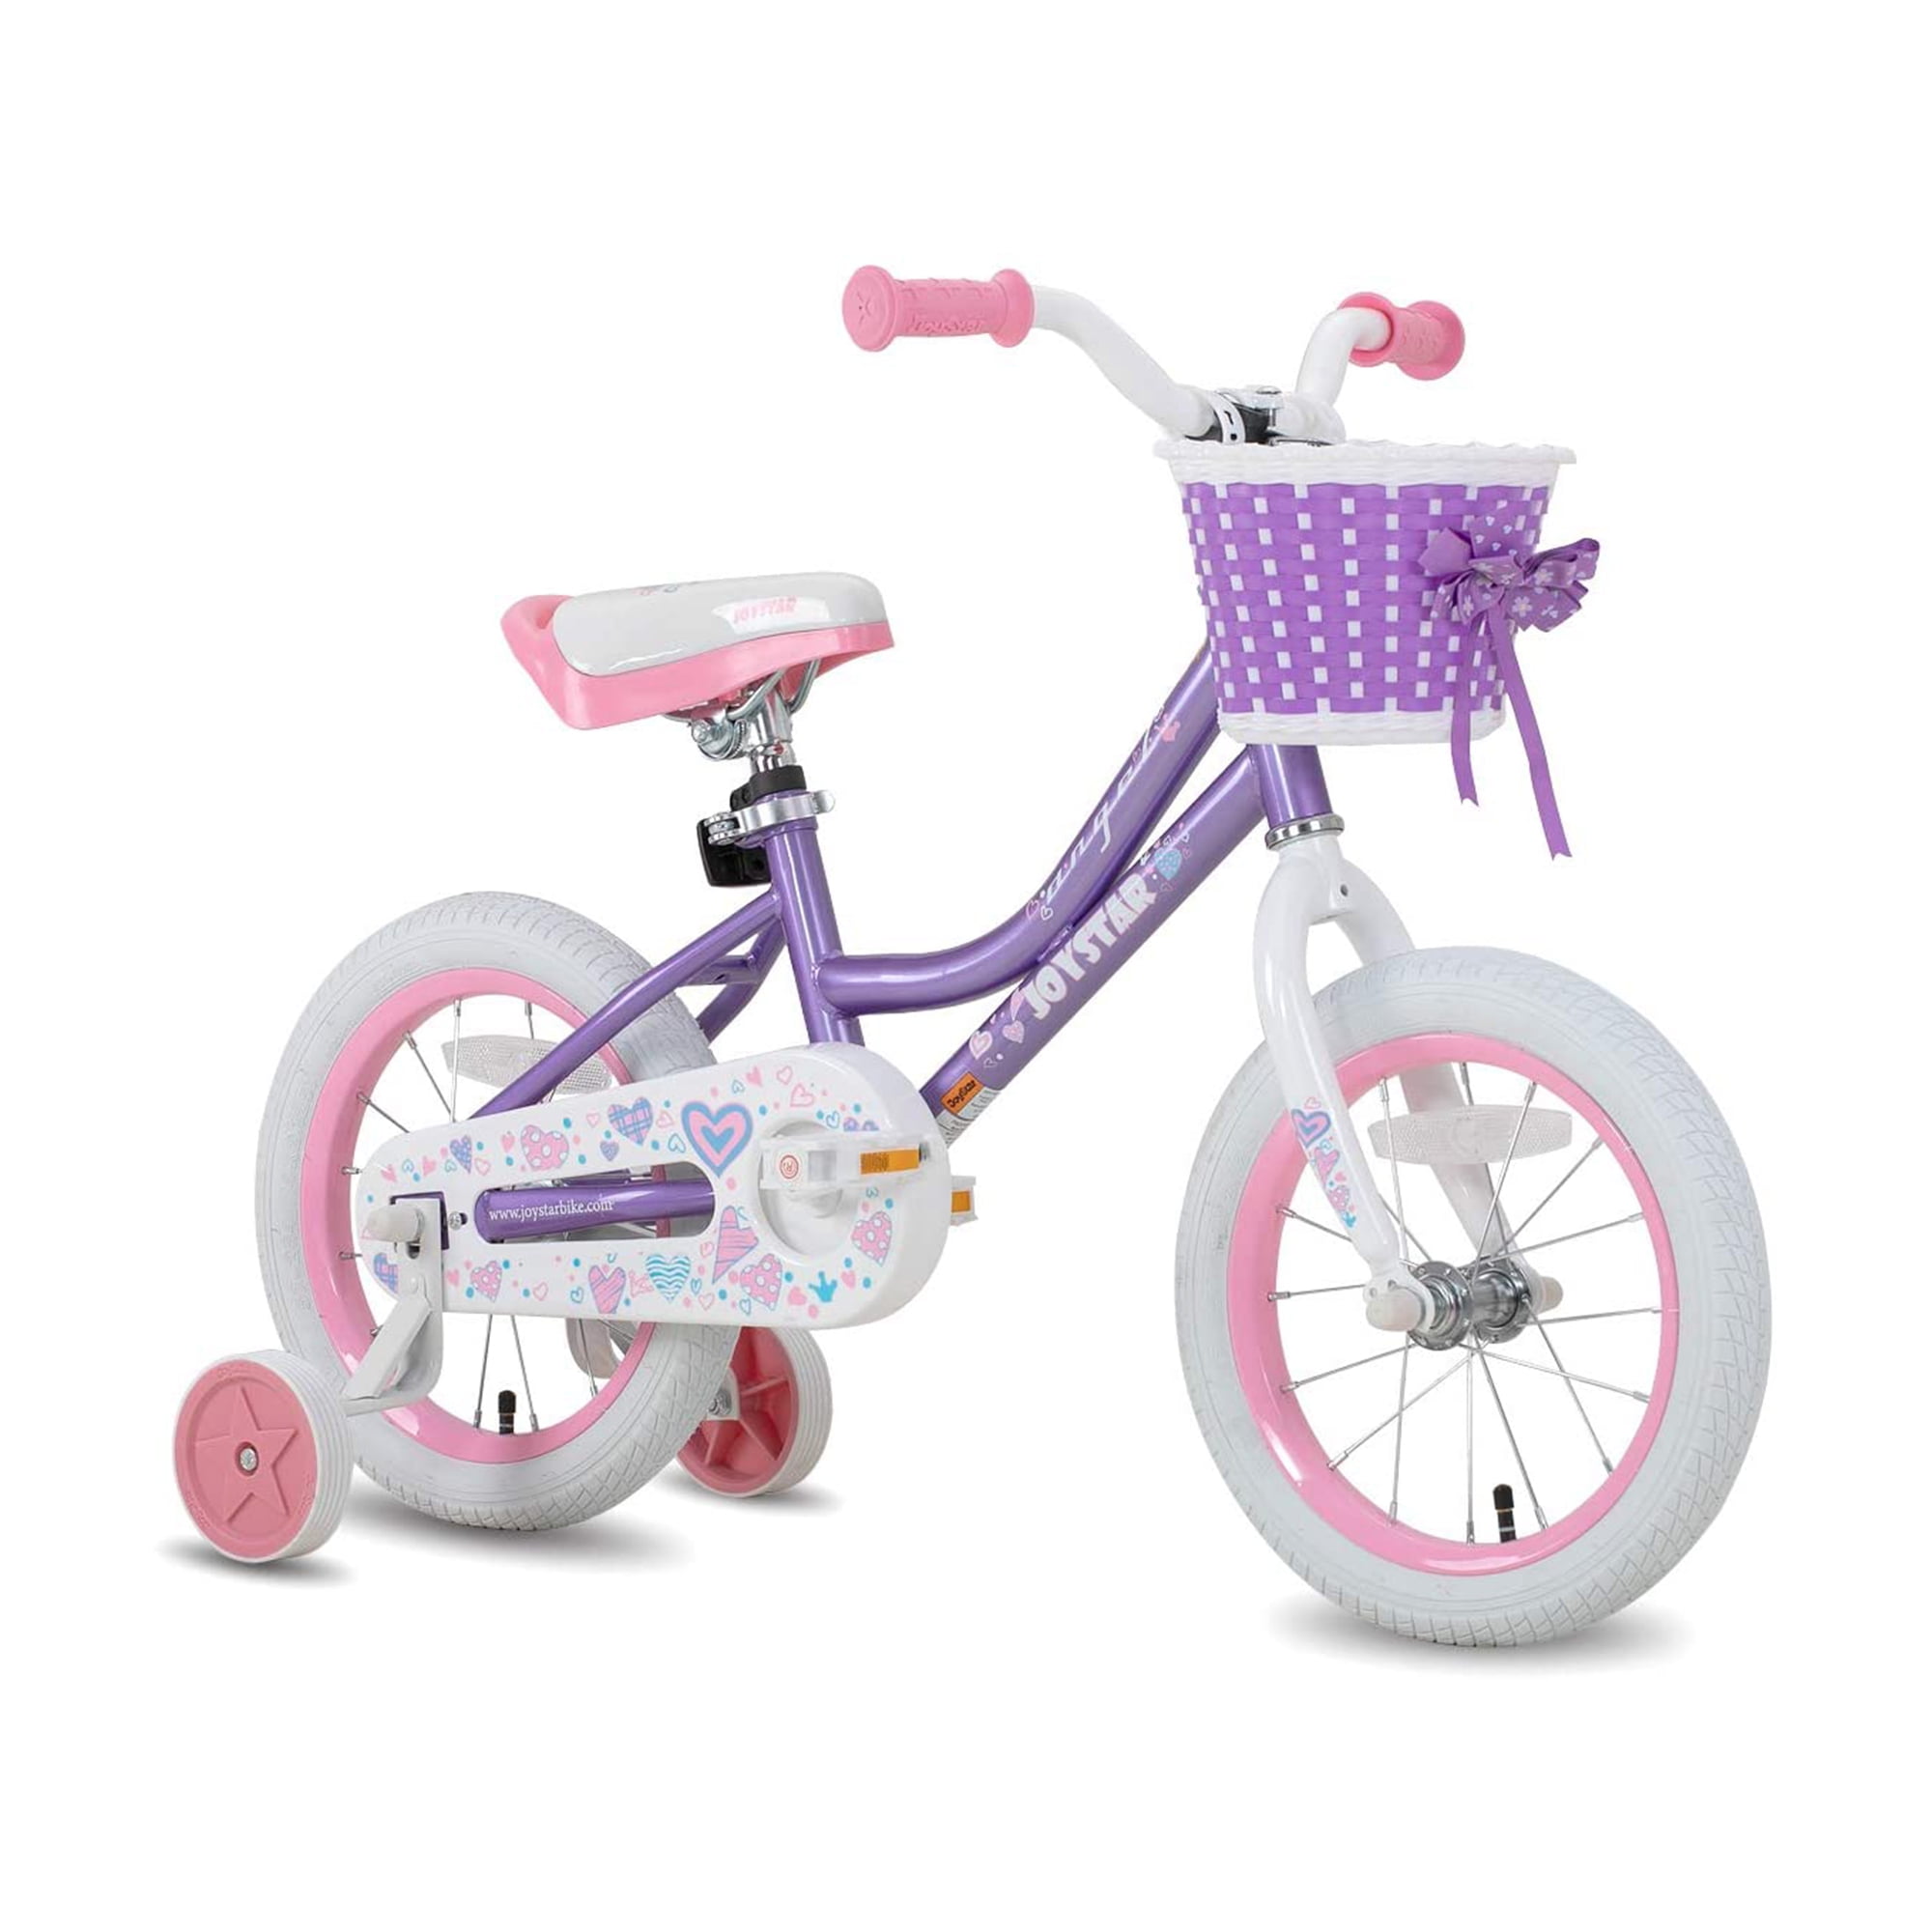 JOYSTAR 16 Inch Girls Bike with Training Wheels for 4 5 6 7 Years Old Kids Gift 